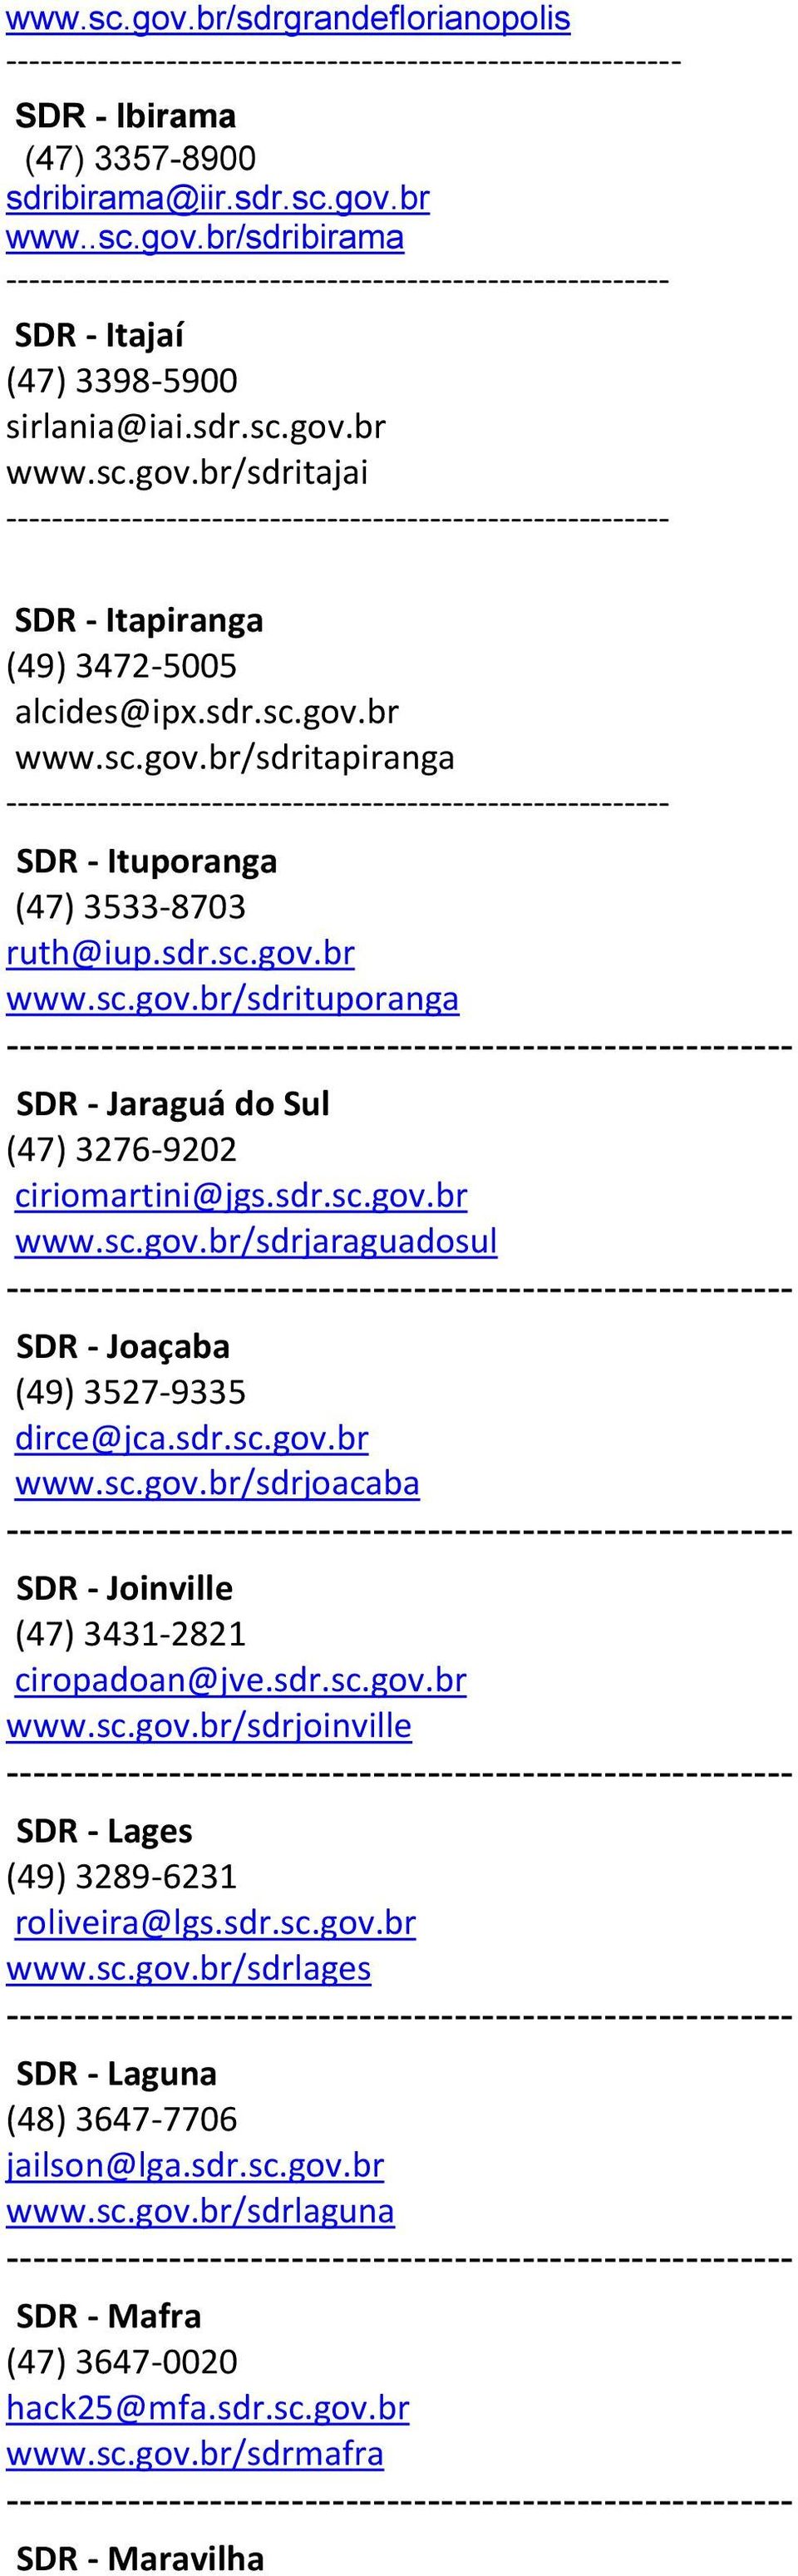 sdr.sc.gov.br www.sc.gov.br/sdrjoacaba SDR - Joinville (47) 3431-2821 ciropadoan@jve.sdr.sc.gov.br www.sc.gov.br/sdrjoinville SDR - Lages (49) 3289-6231 roliveira@lgs.sdr.sc.gov.br www.sc.gov.br/sdrlages SDR - Laguna (48) 3647-7706 jailson@lga.